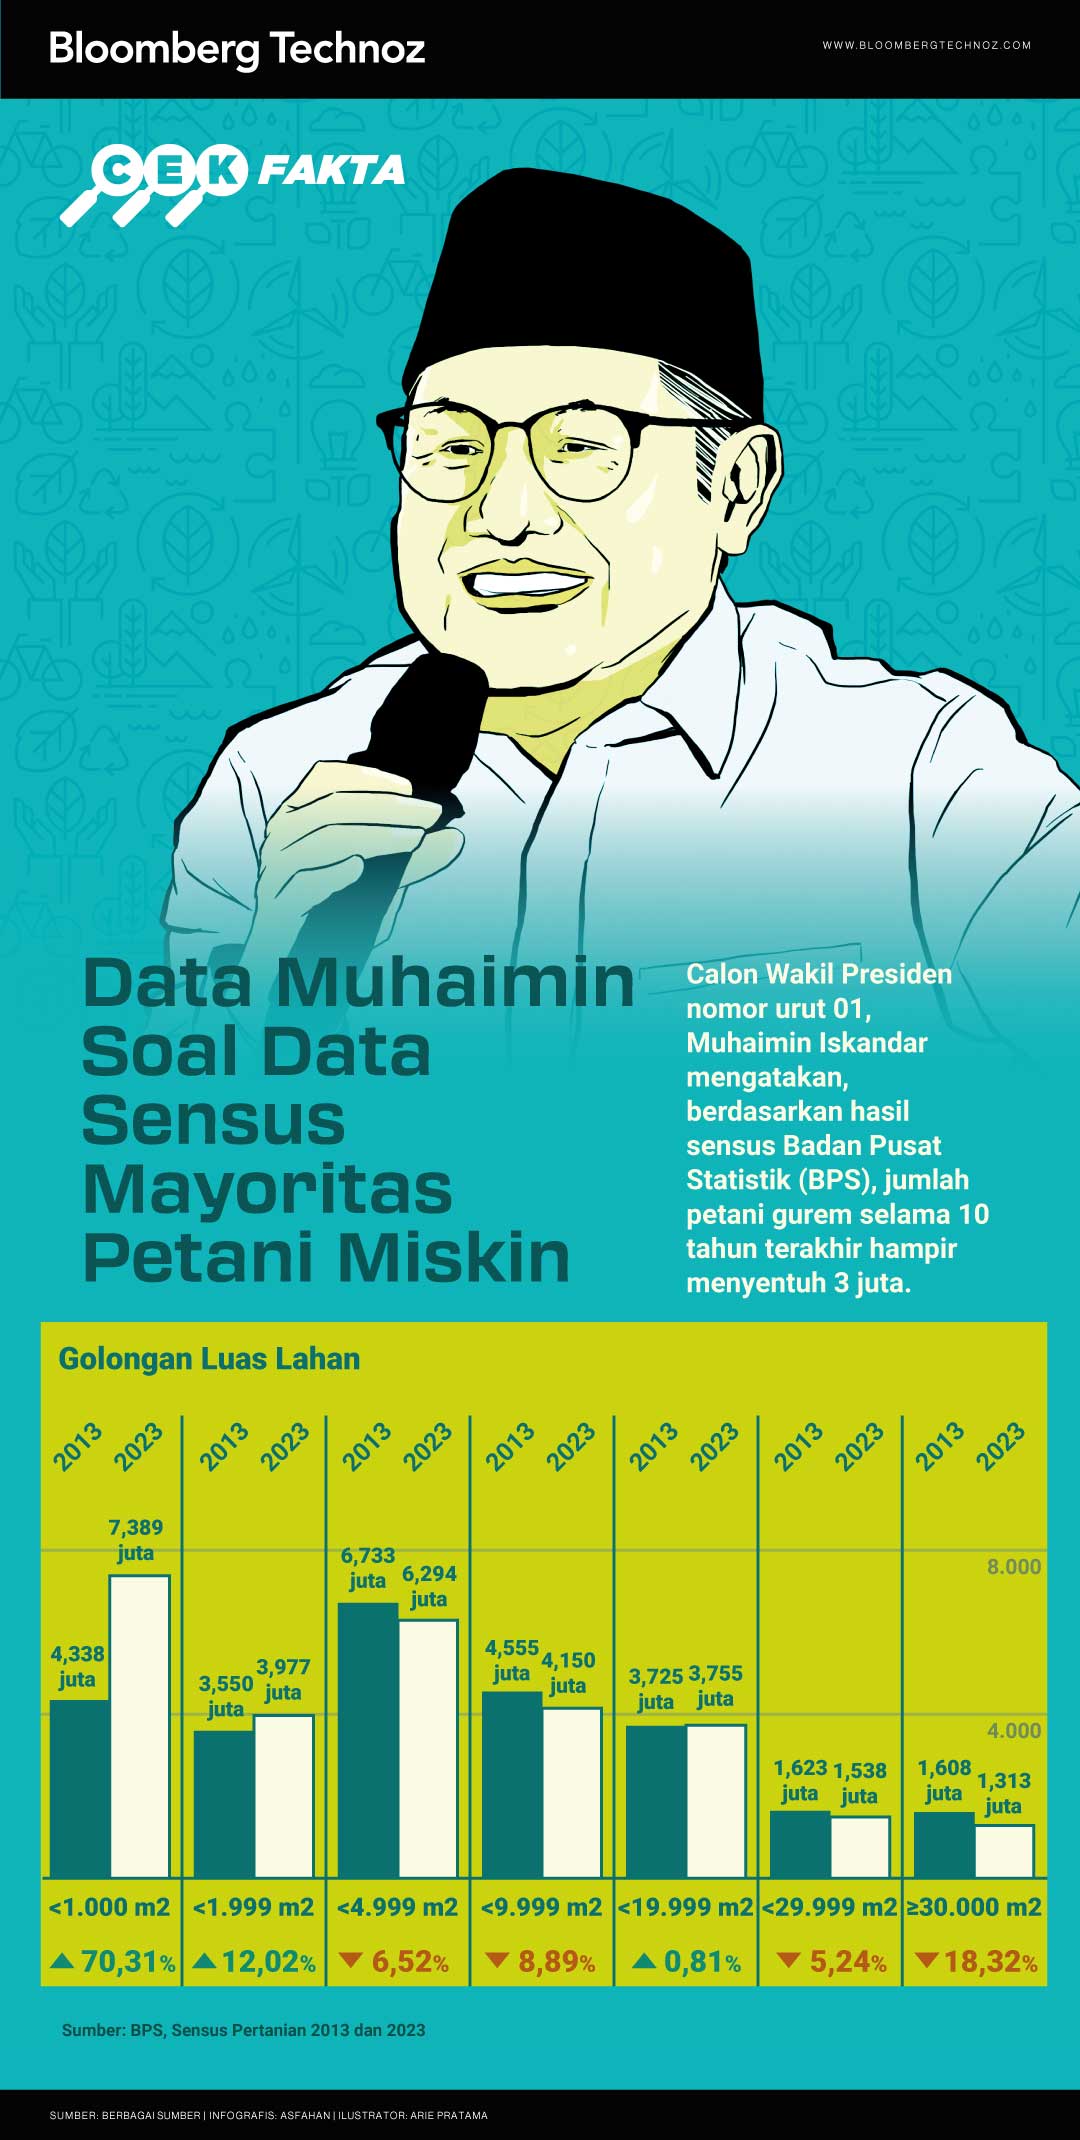 Infografis Cek Fakta Data Muhaimin Soal Data Sensus Mayoritas Petani Miskin (Asfahan/Bloomberg Technoz)